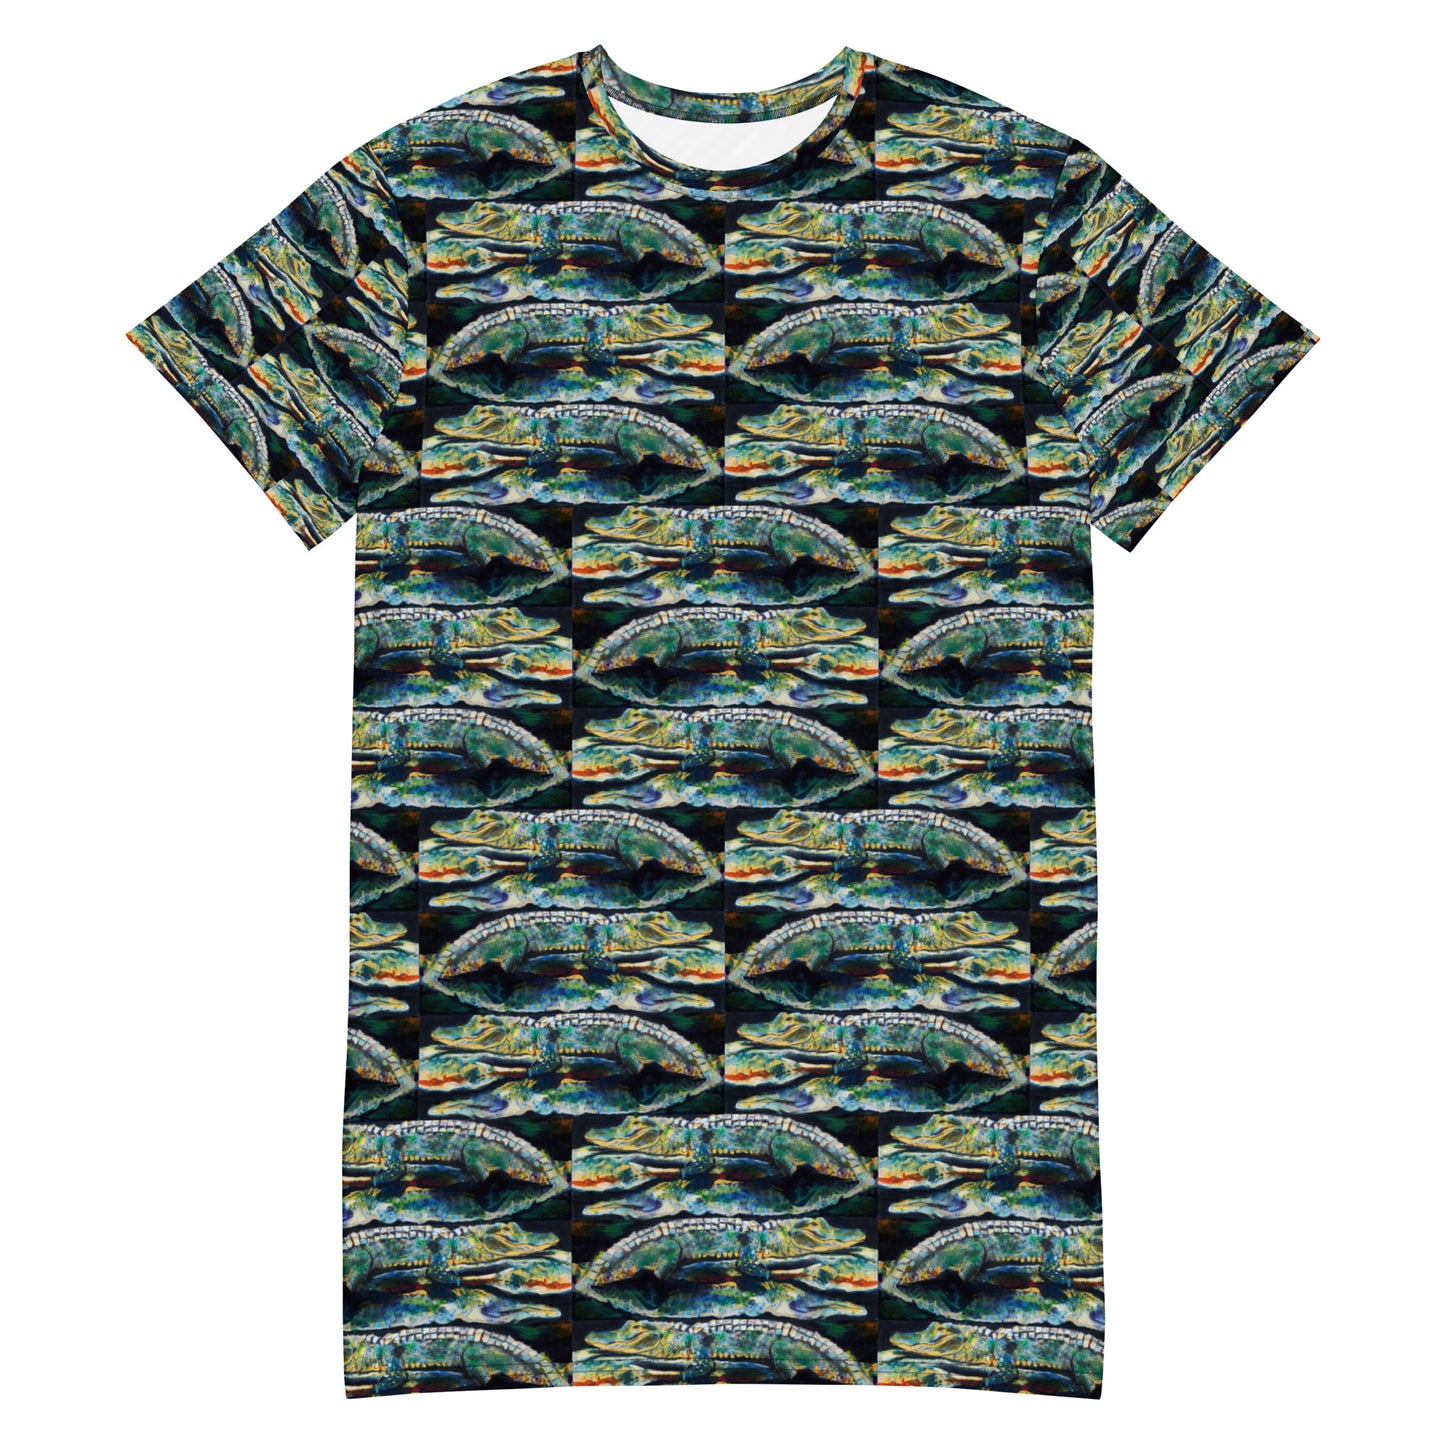 Gator Reflections T-shirt dress